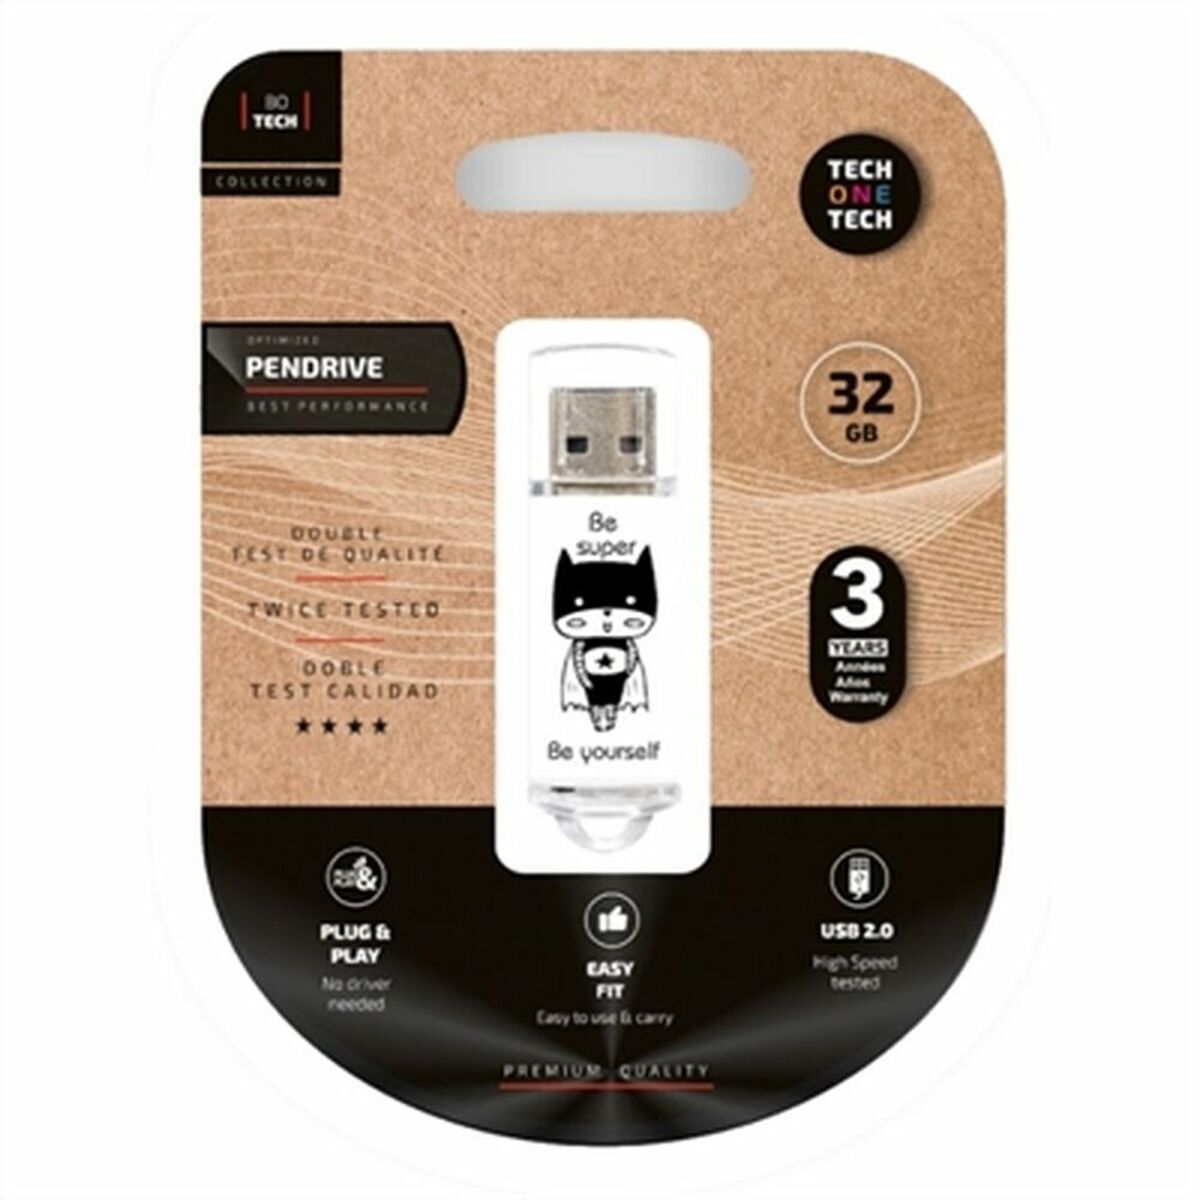 Clé USB Tech One Tech TEC4018-32 Noir/Blanc 32 GB